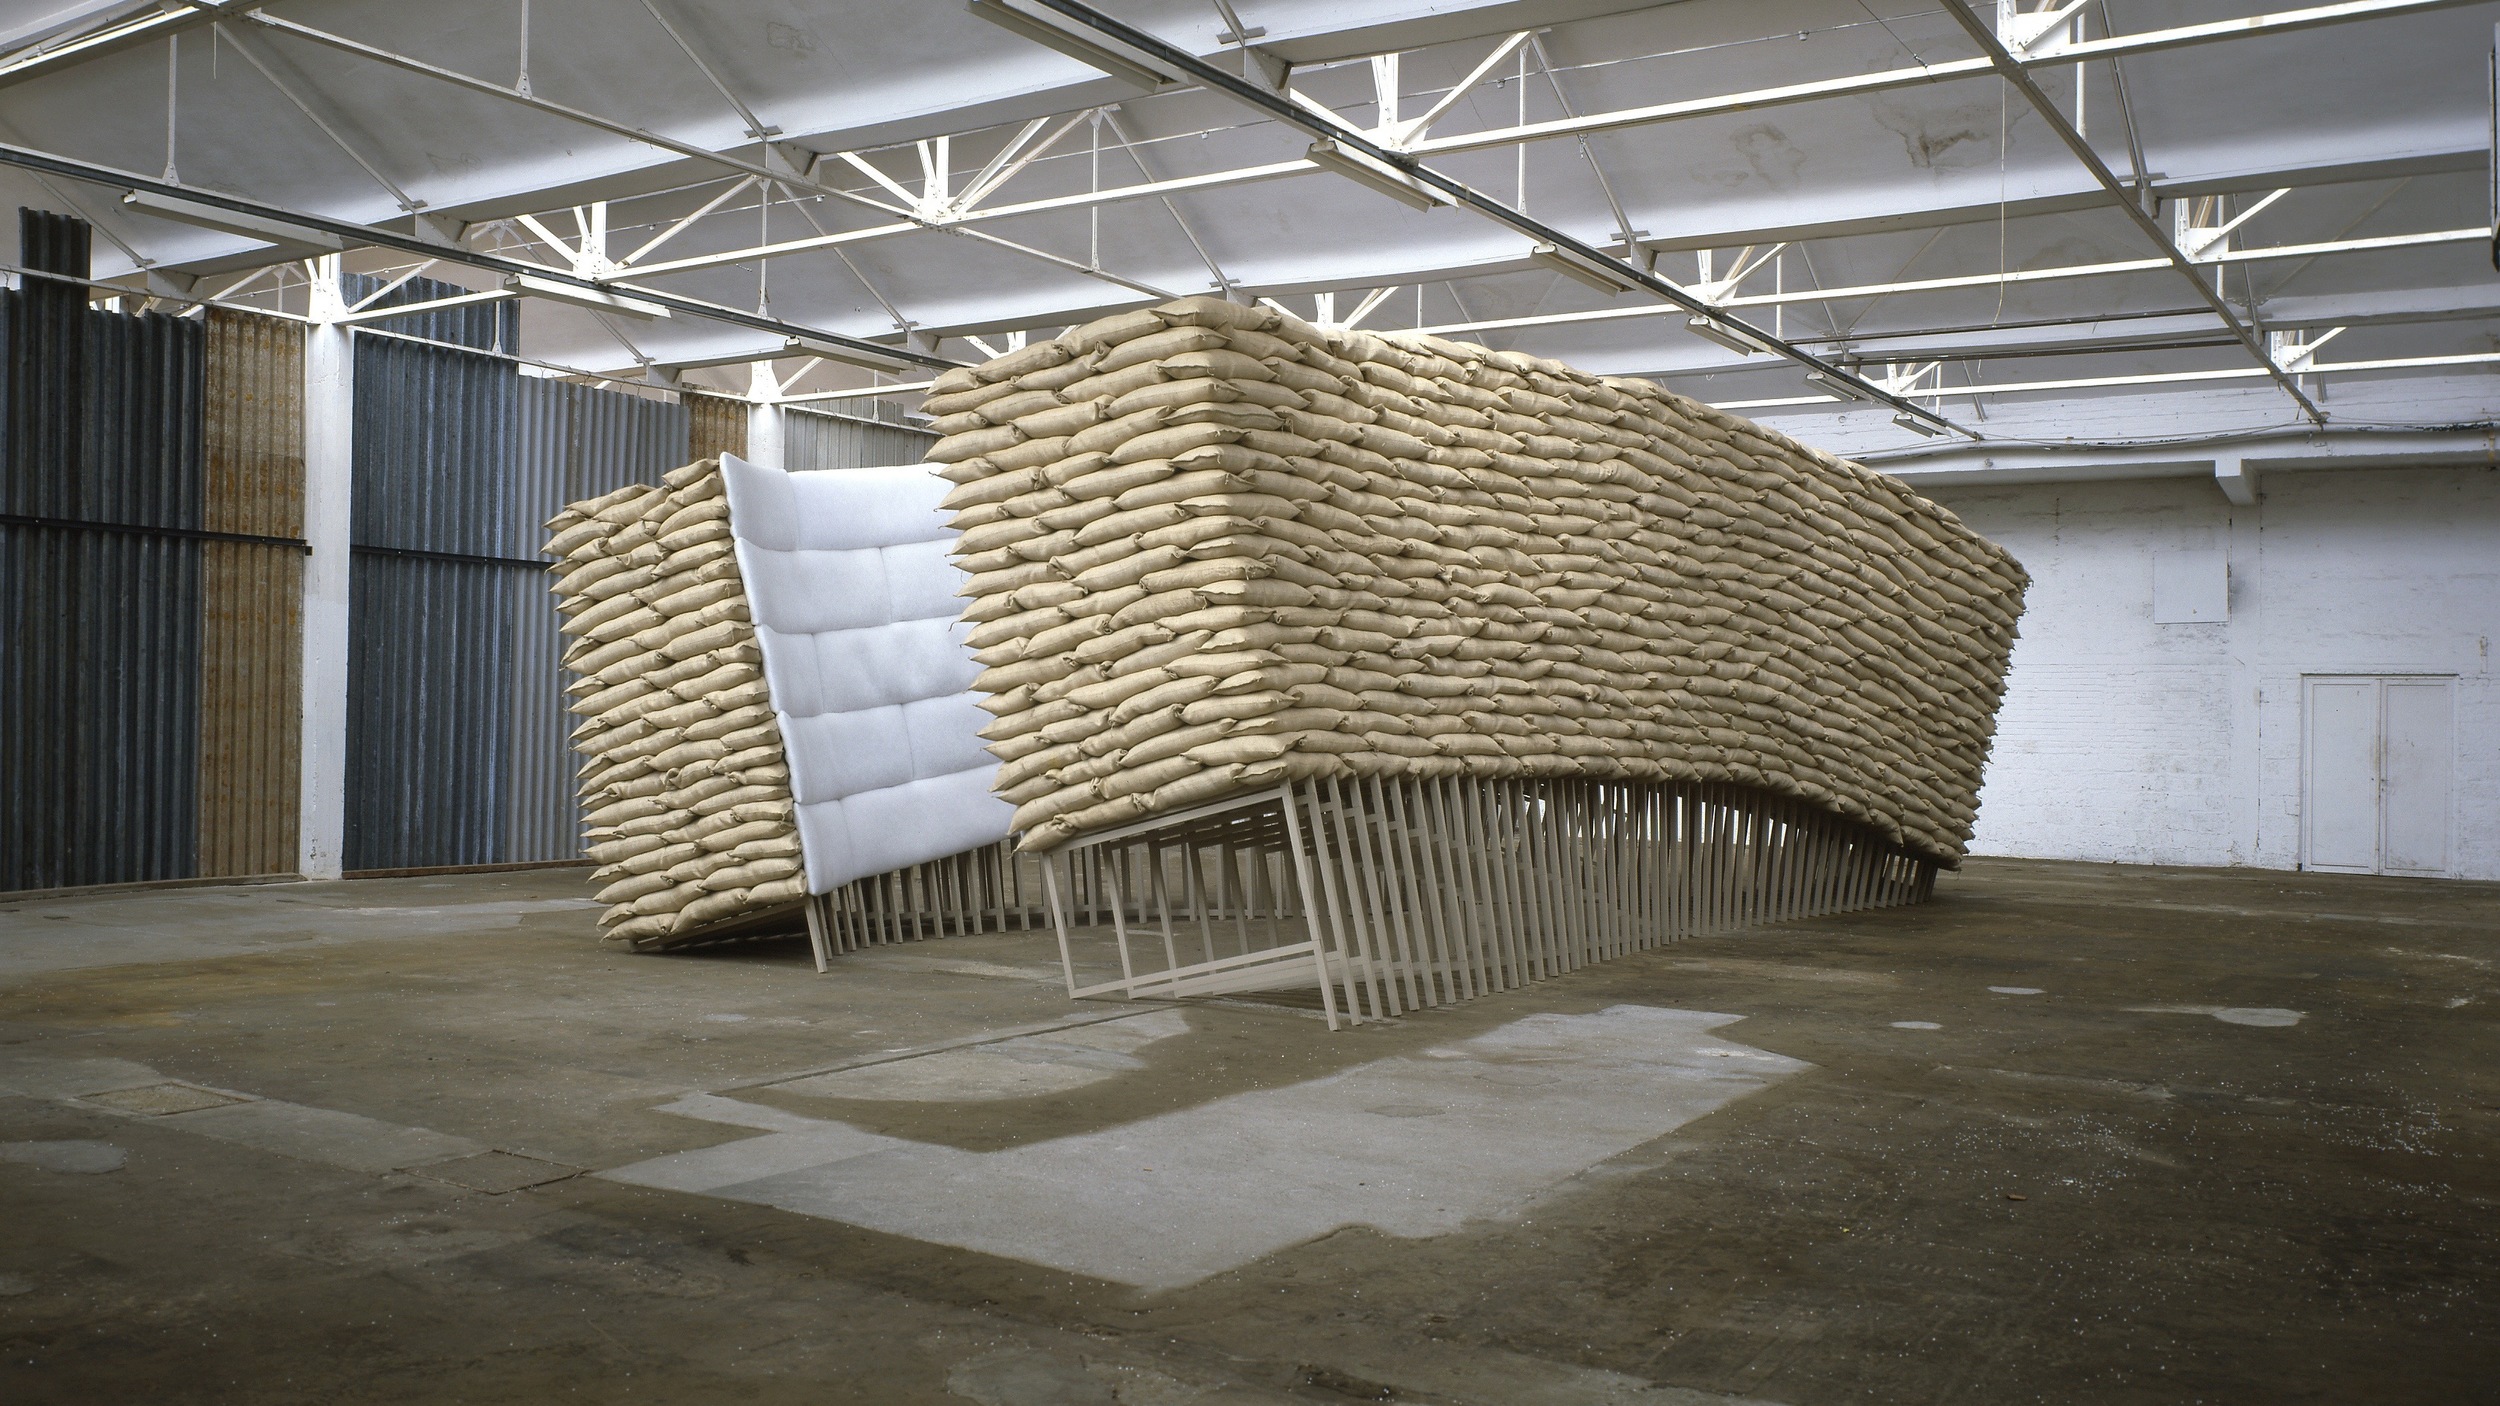   Nancy Turlington, 1994 , wood, sandbags, putty, upholstery, 372 x 604 x 1221 cm. Installation view at Kanaal, Kortrijk, Belgium 